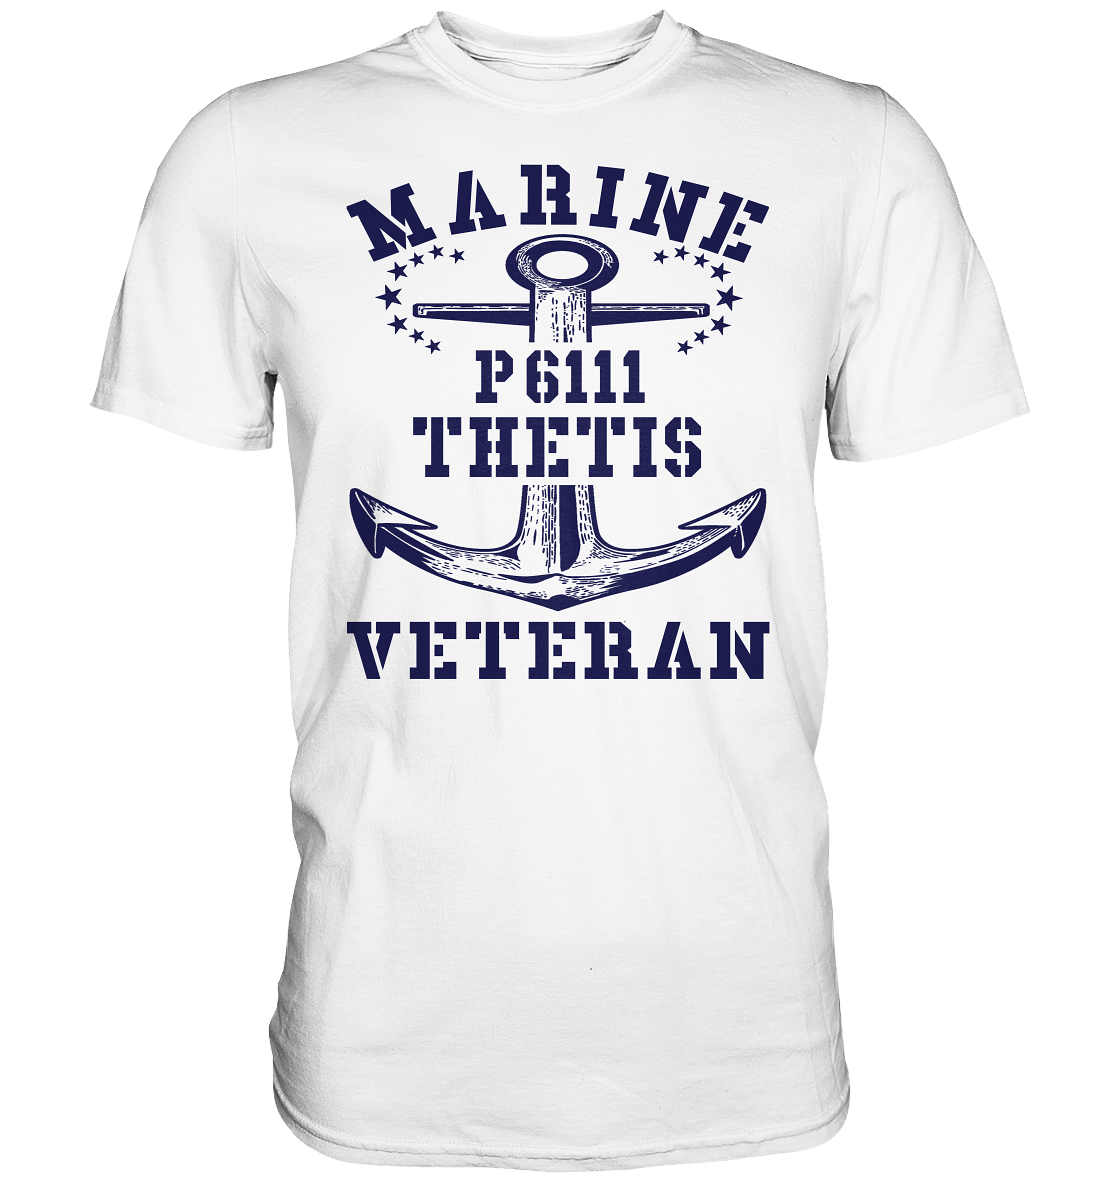 U-Jagdboot P6112 HERMES Marine Veteran - Premium Shirt